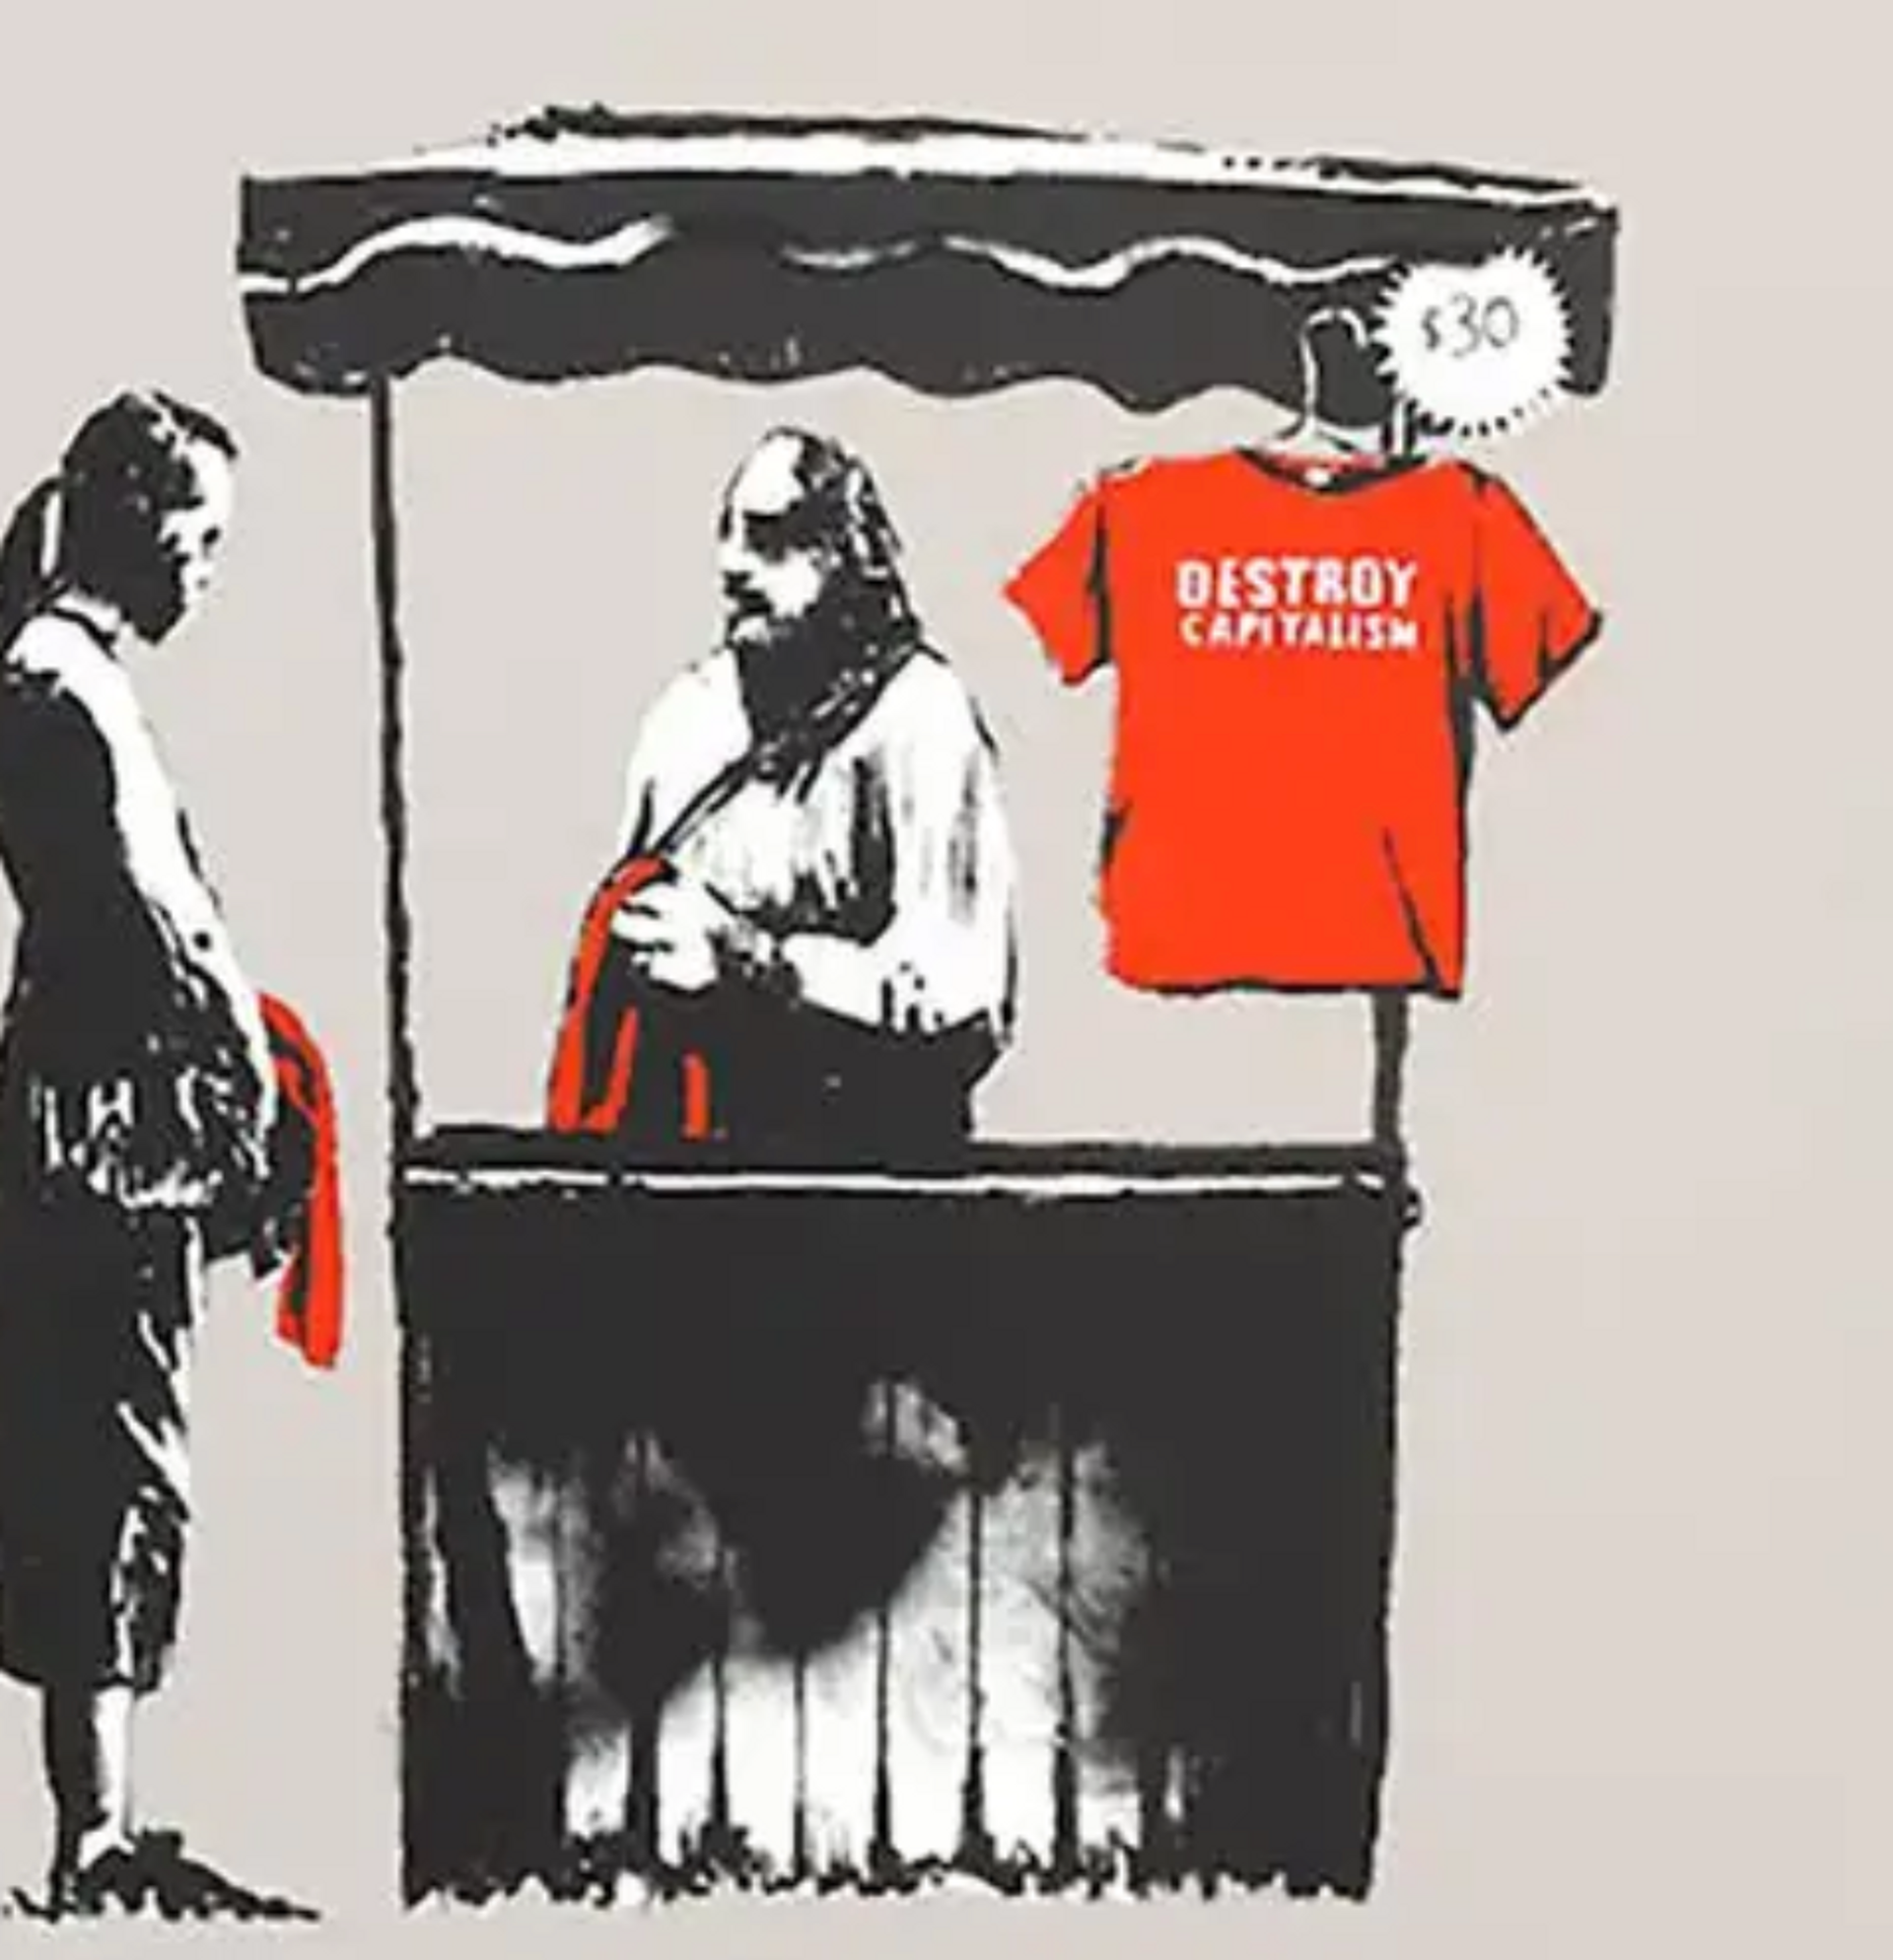 Festival (Destroy Capitalism) by Banksy - MyArtBroker